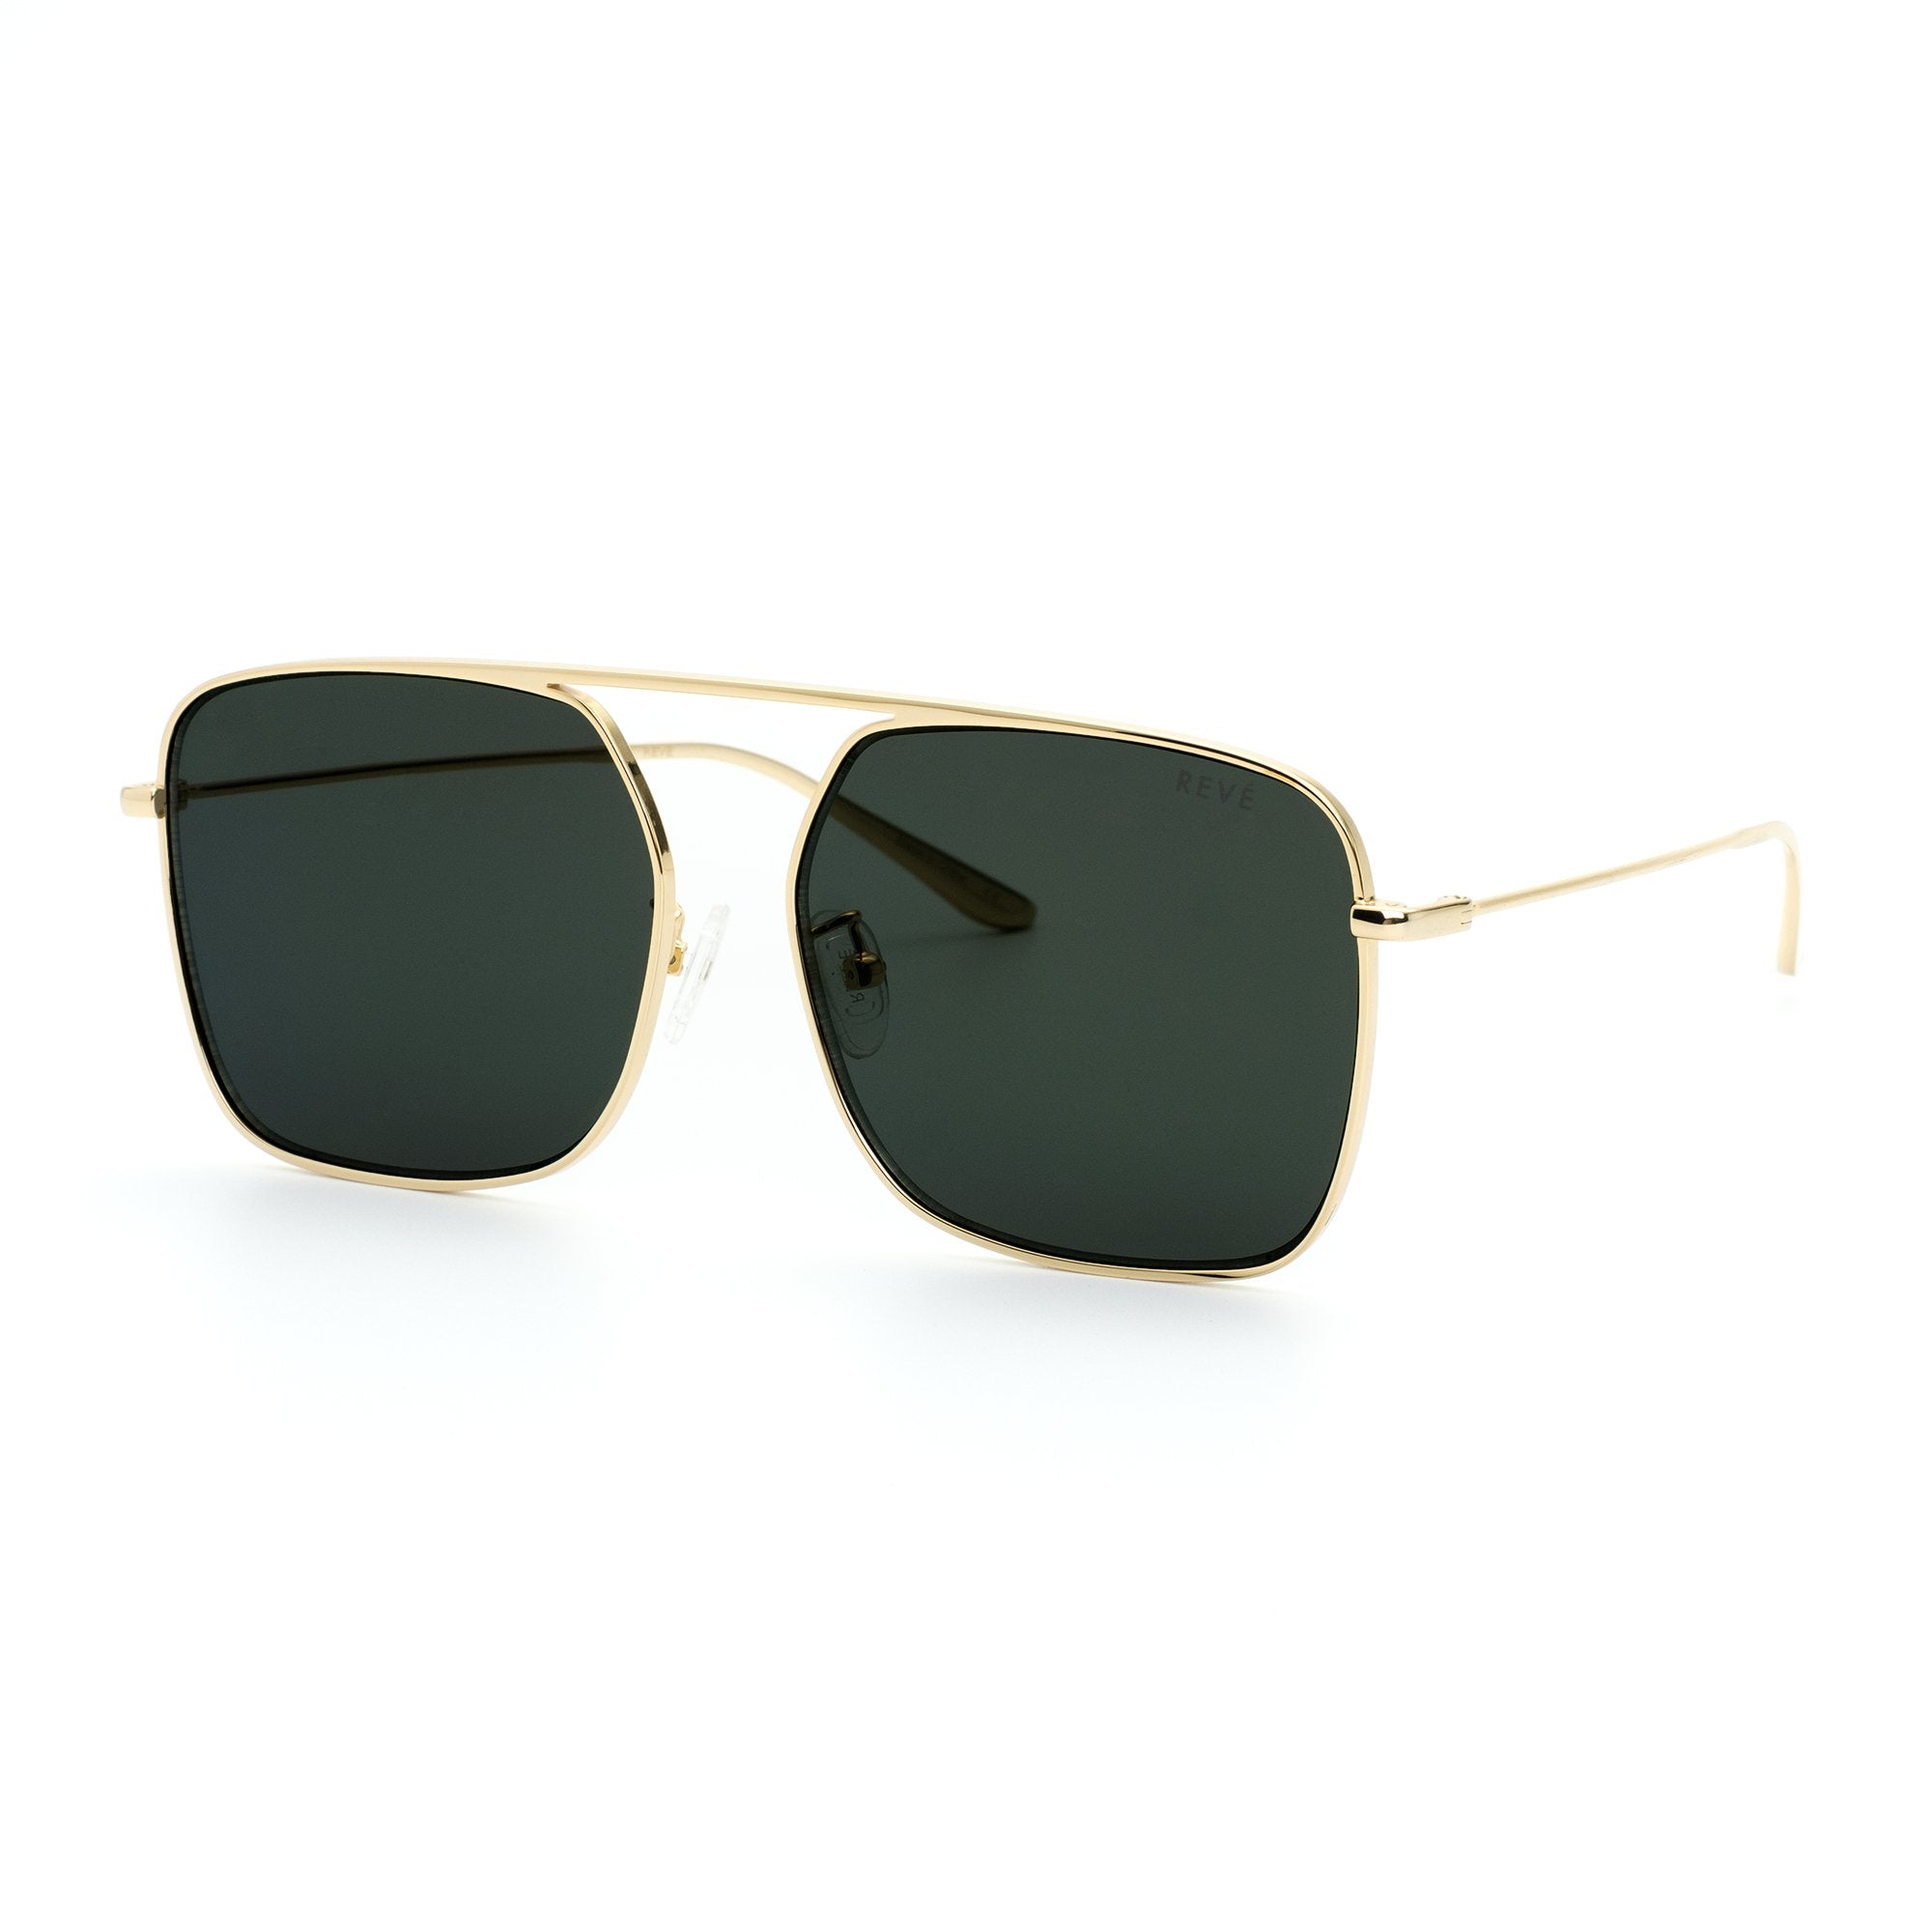 REVE by RENE BPM aviator sunglasses in black